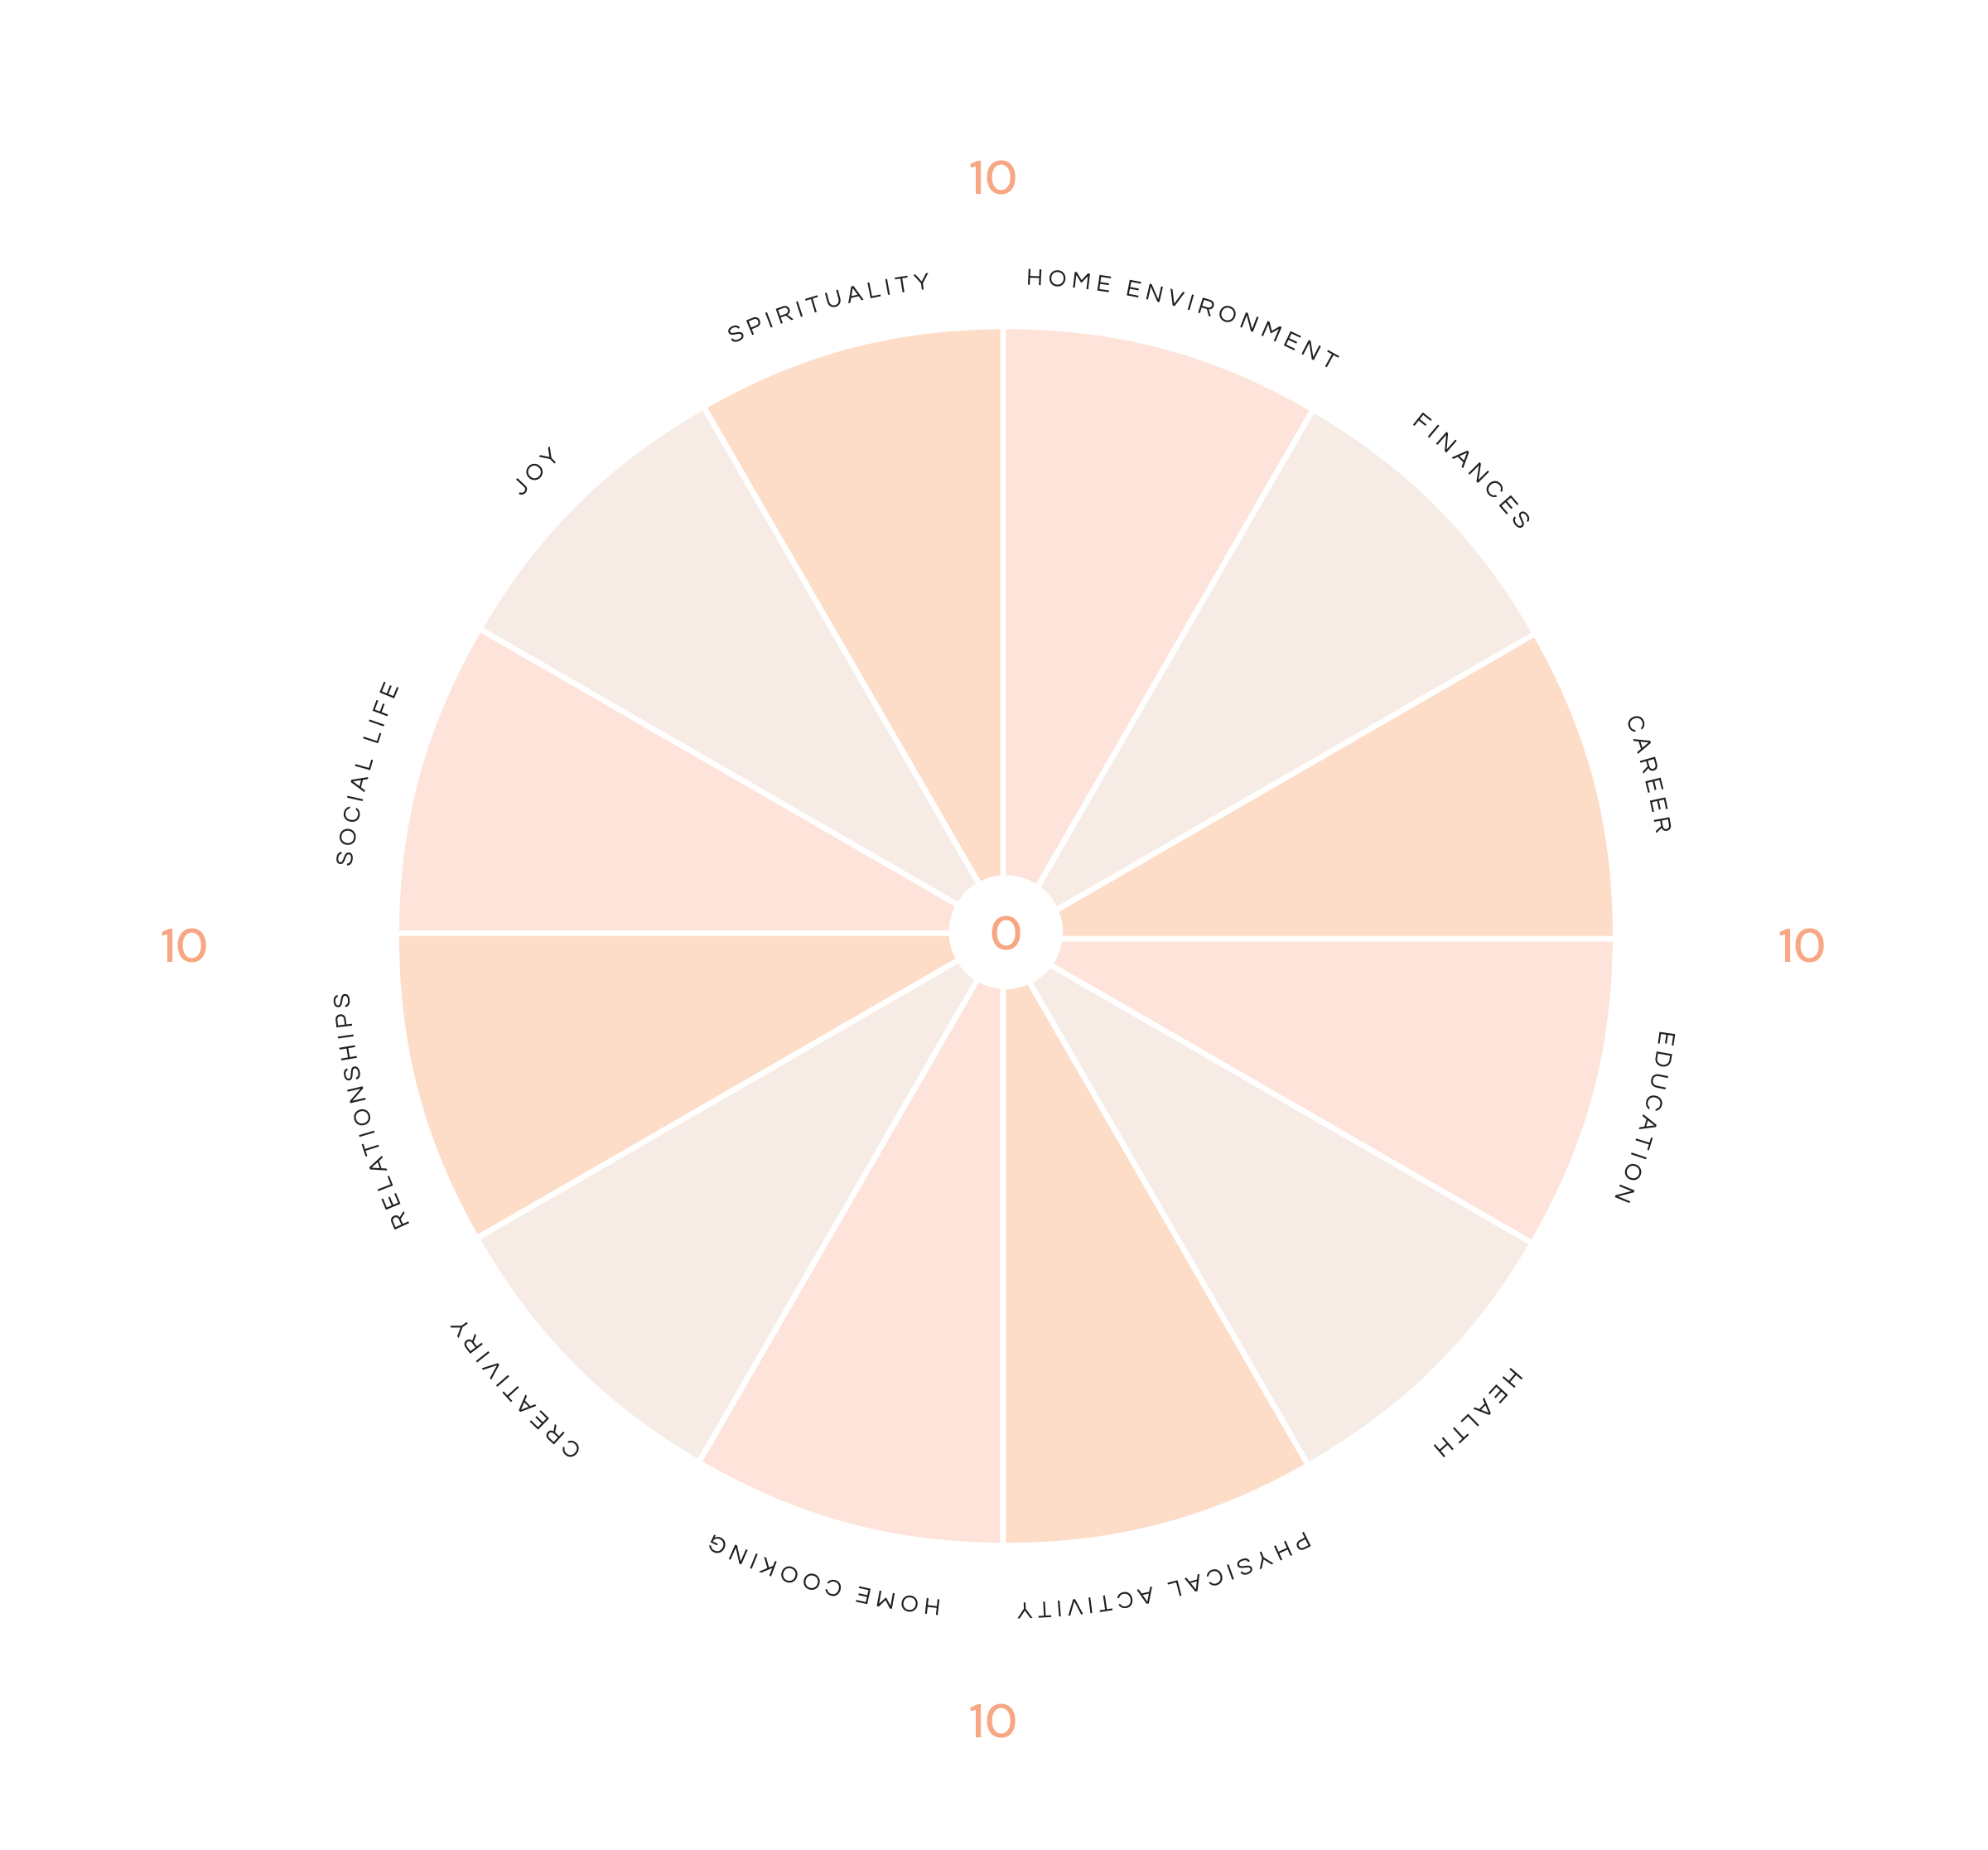 Animation of Circle of Life Analysis Wheel